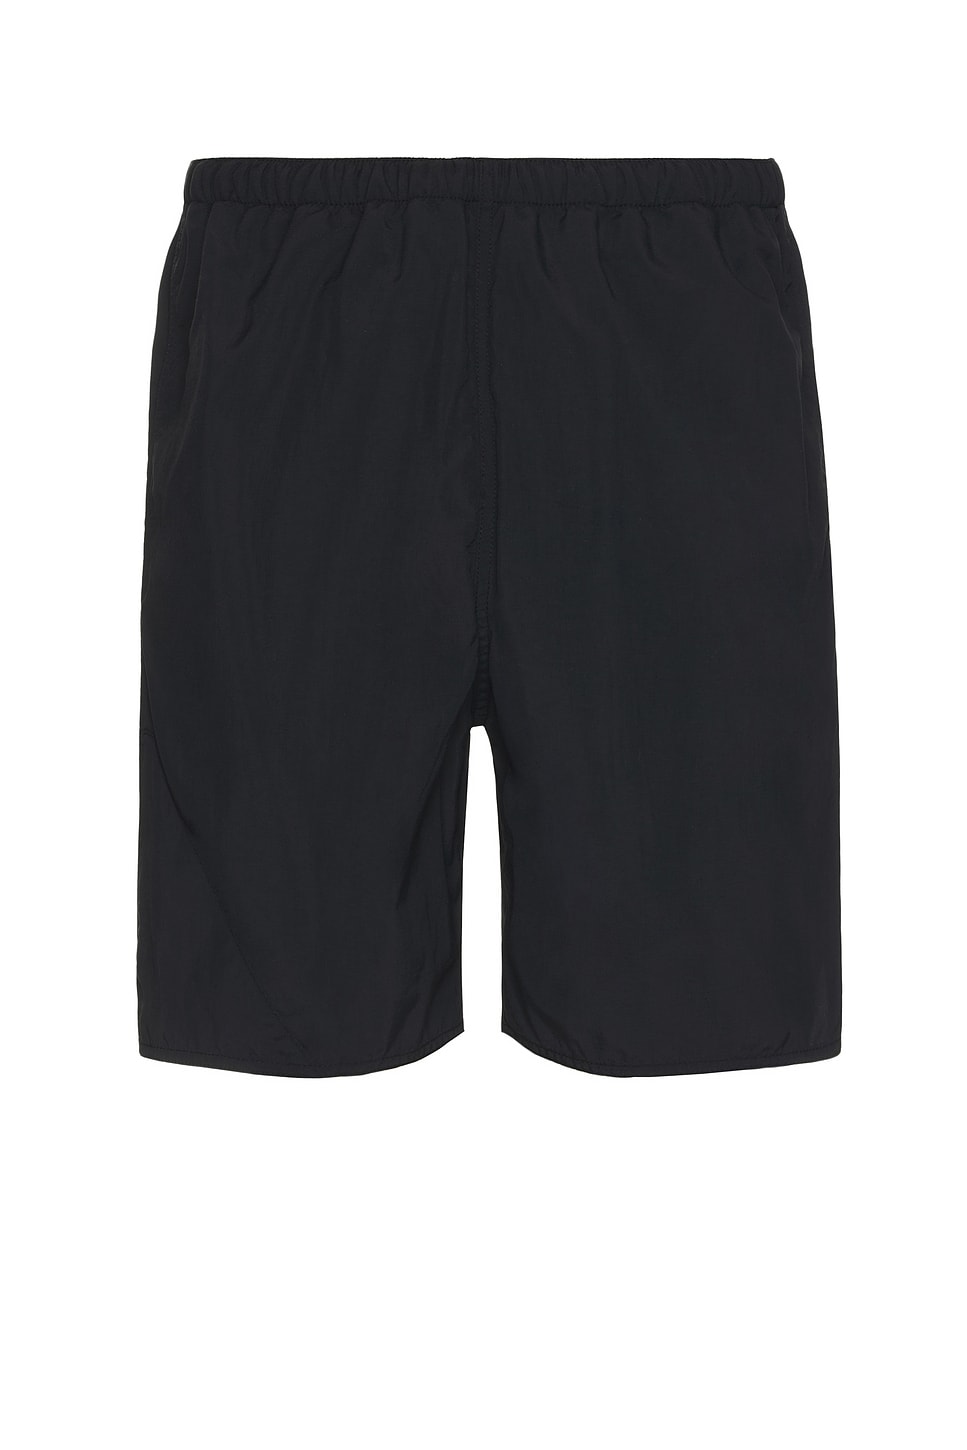 Image 1 of Beams Plus Mil Athletic Shorts Nylon in Black